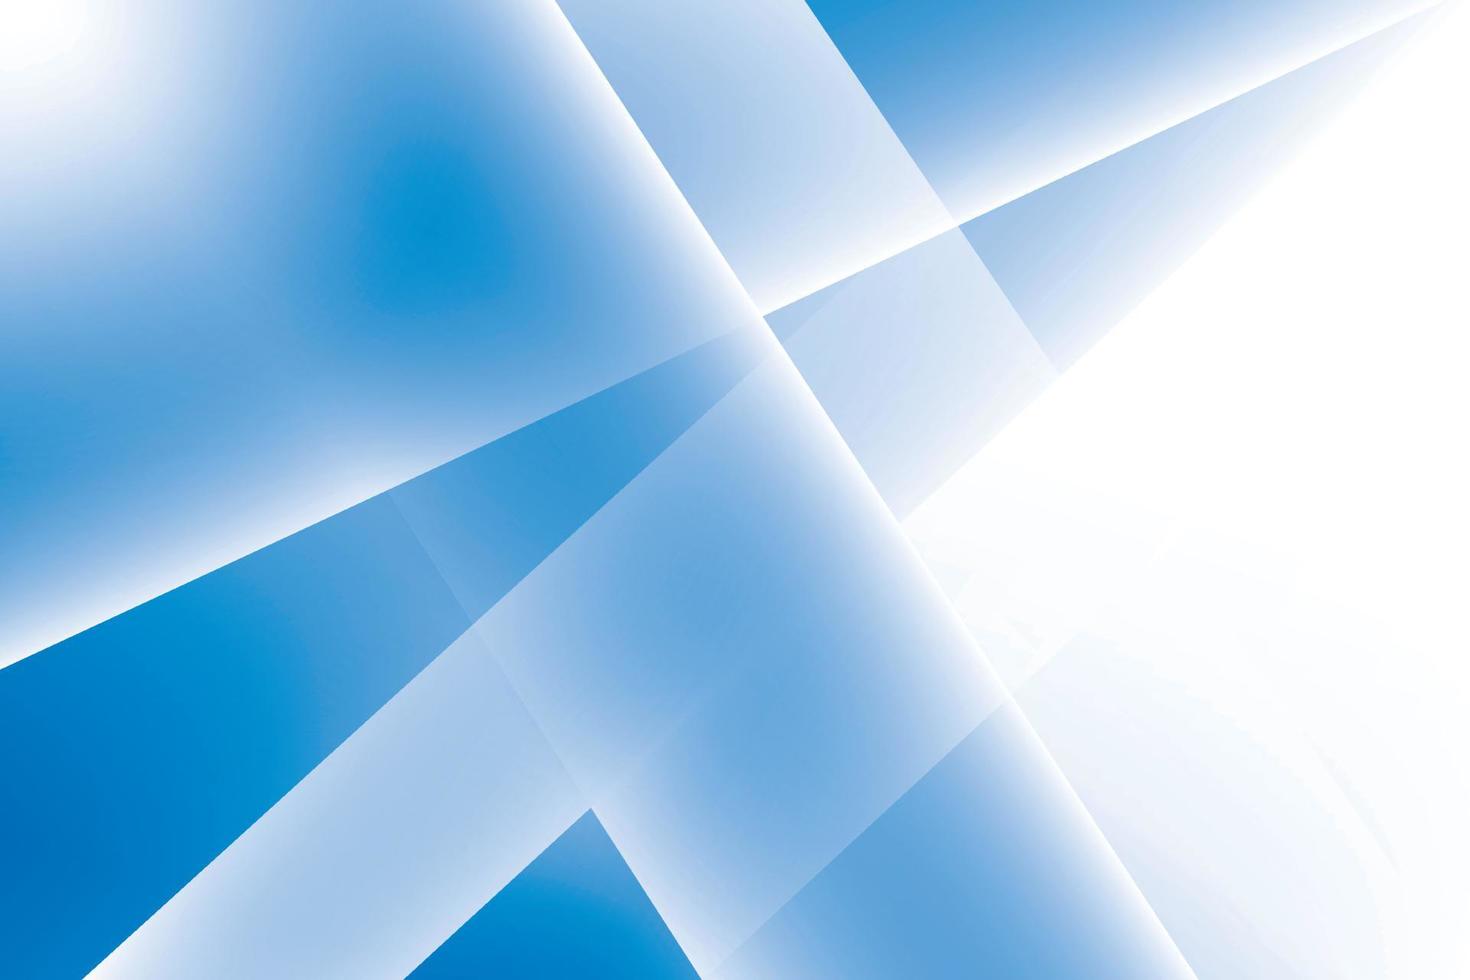 asstract geometrisk blå och vit bakgrund. vektor illustration.